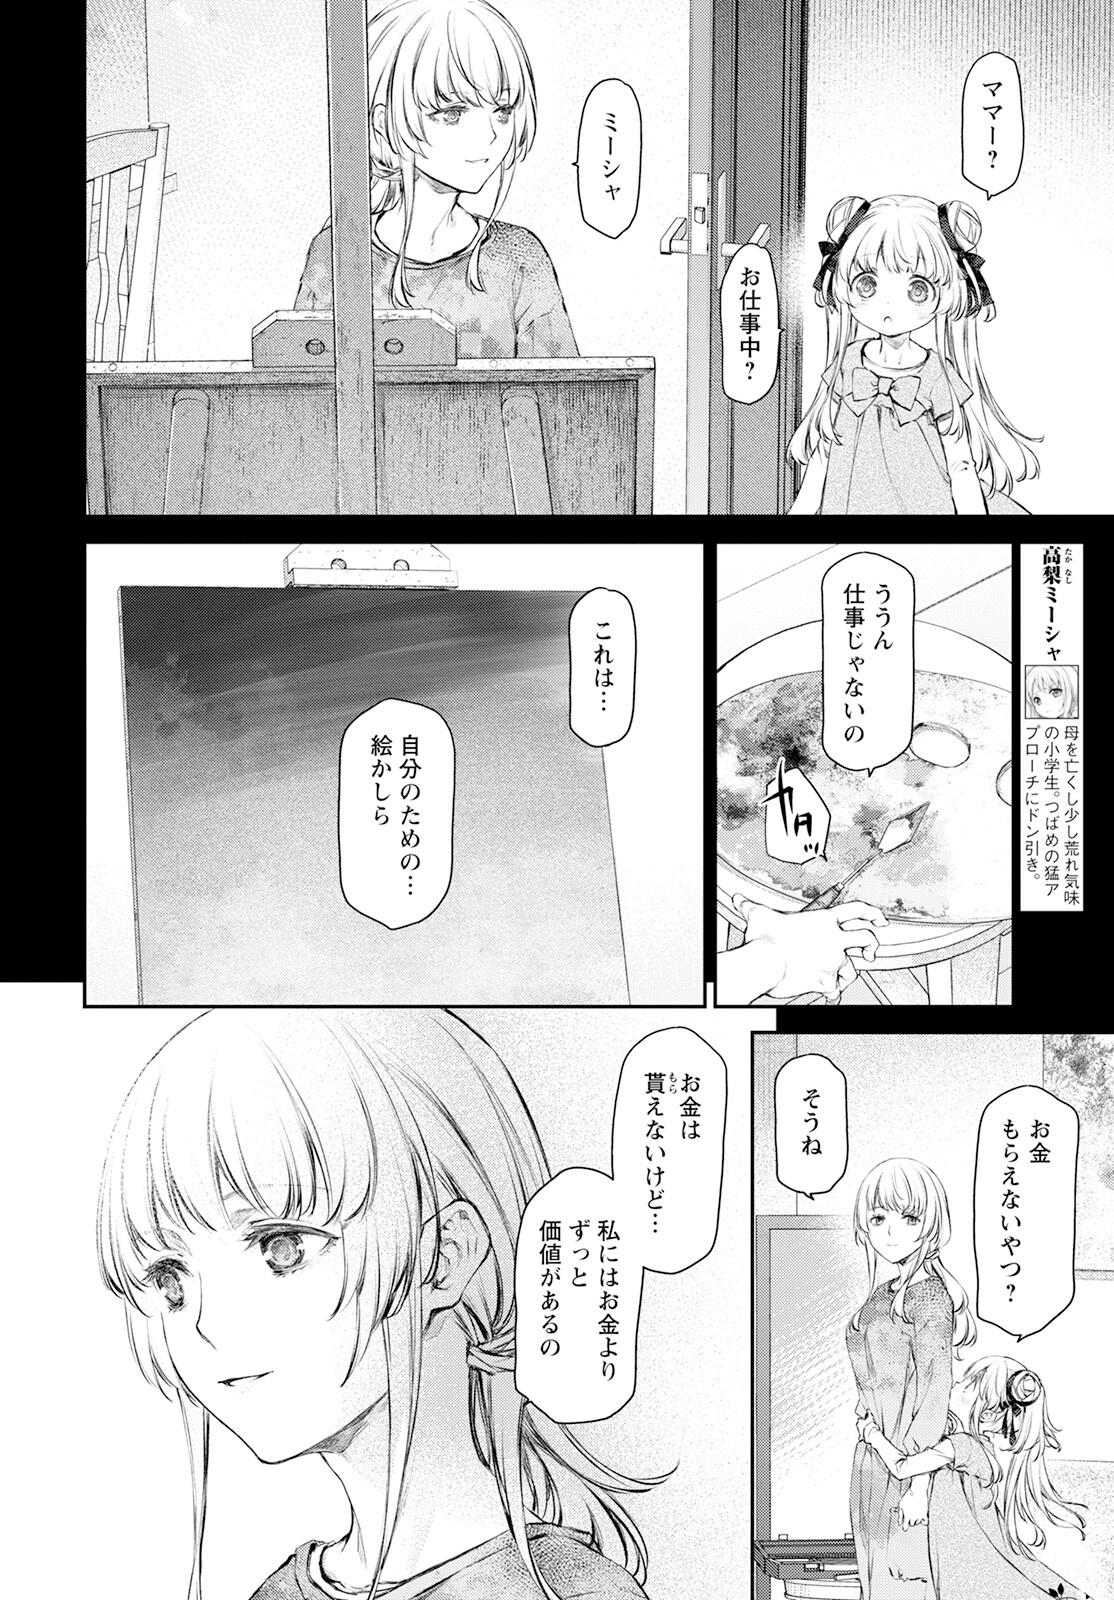 Uchi no Maid ga Uzasugiru! - Chapter 57 - Page 2